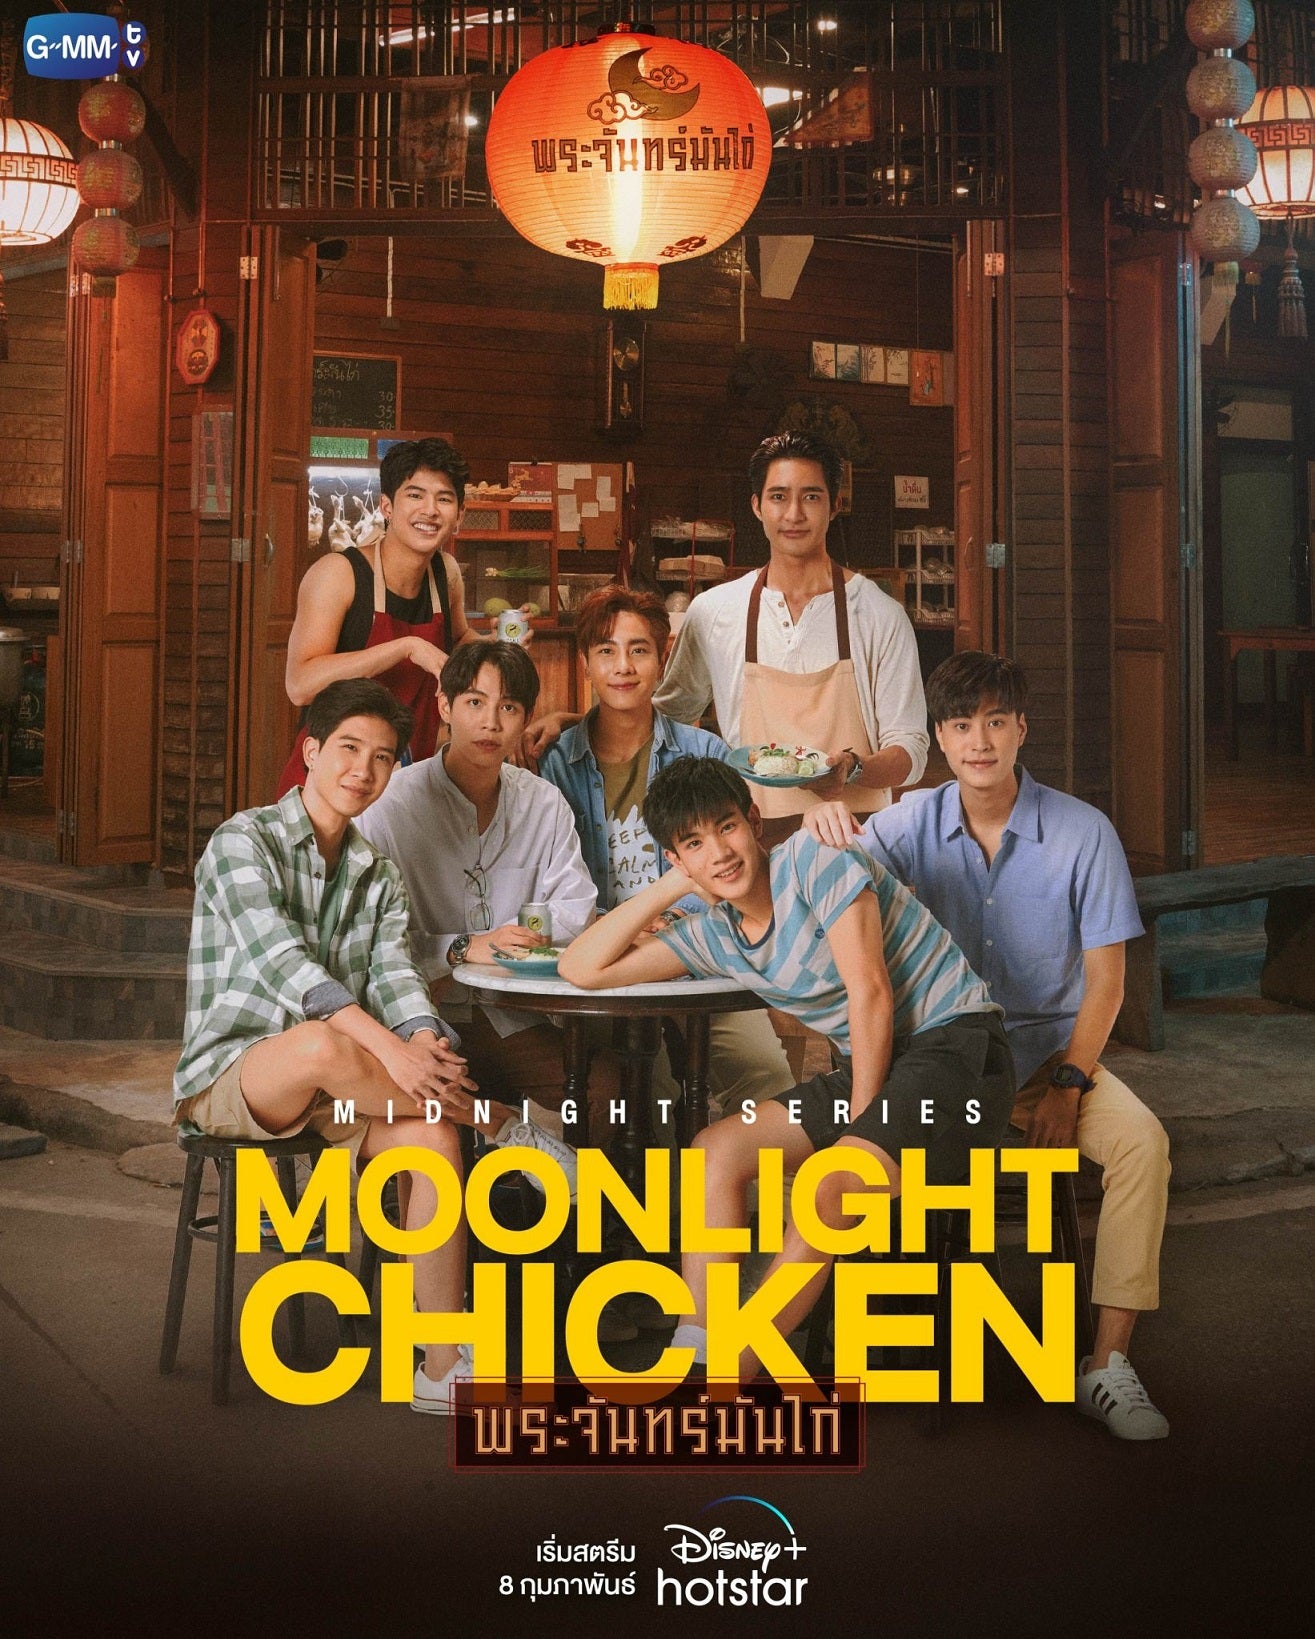 TV ratings for Moonlight Chicken (Midnight Series : Moonlight Chicken พระจันทร์มันไก่) in Poland. GMM 25 TV series